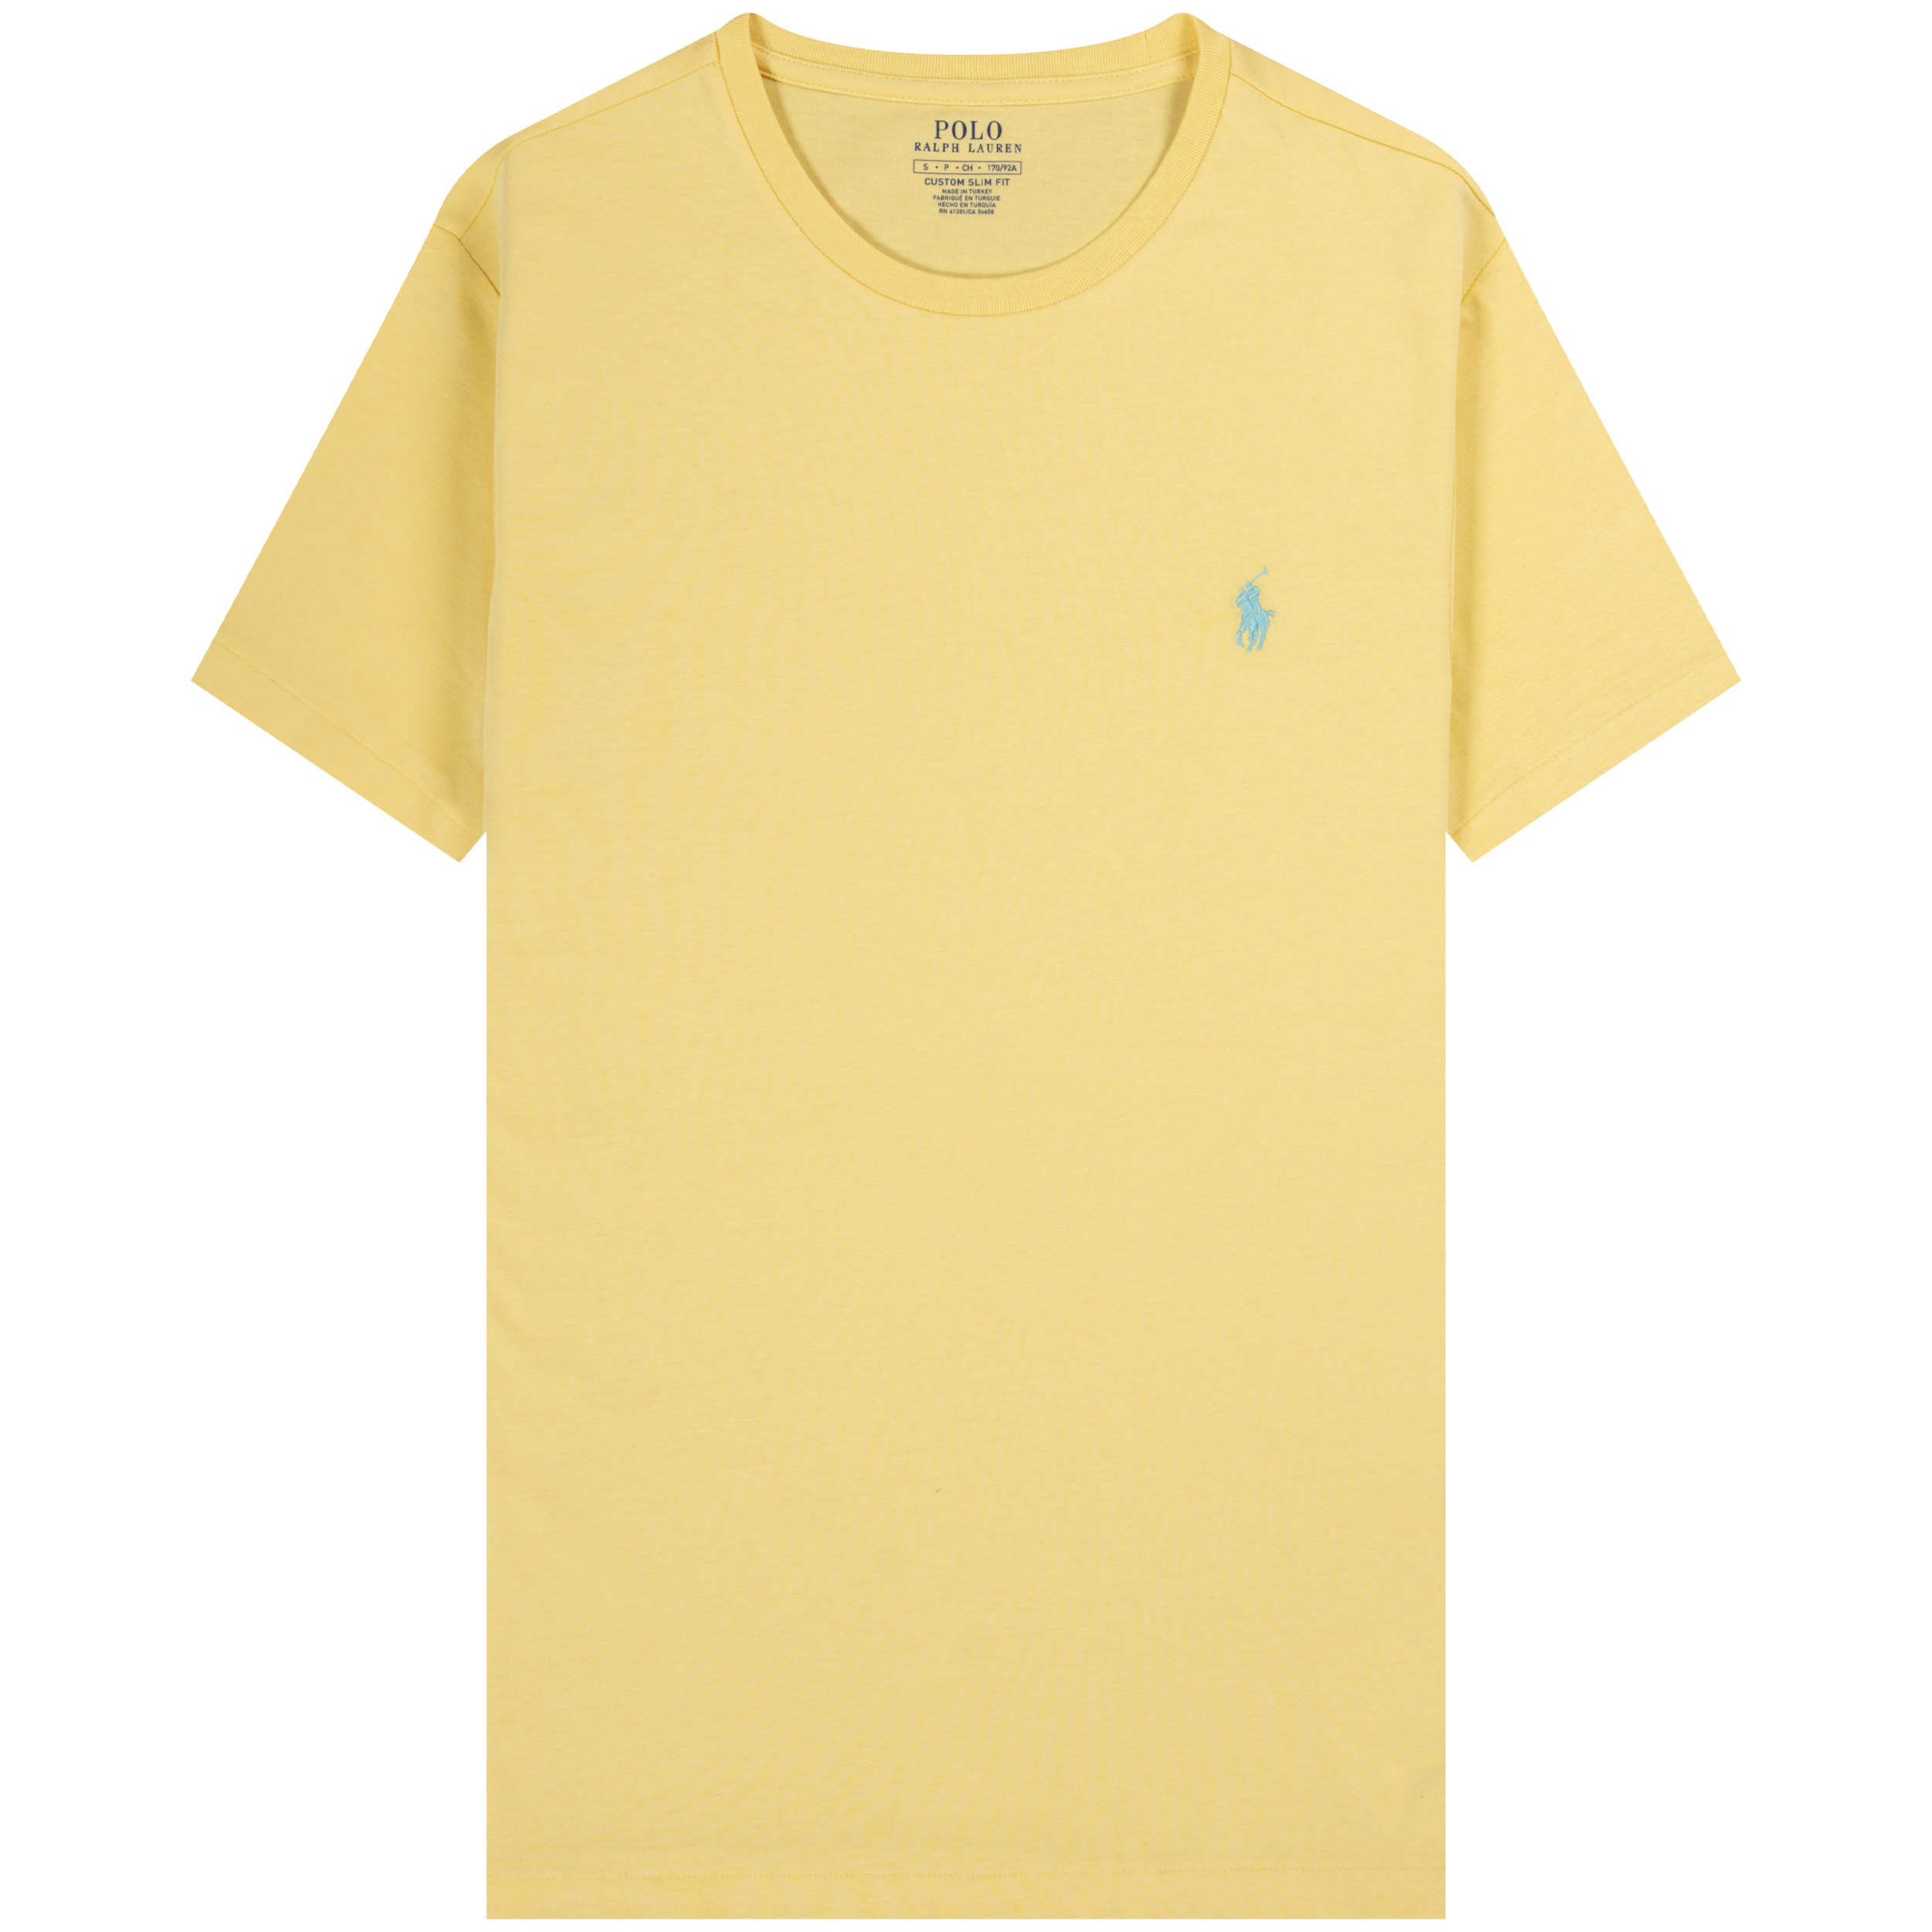 Polo Ralph Lauren 'Slim Fit' Cotton T-Shirt Yellow